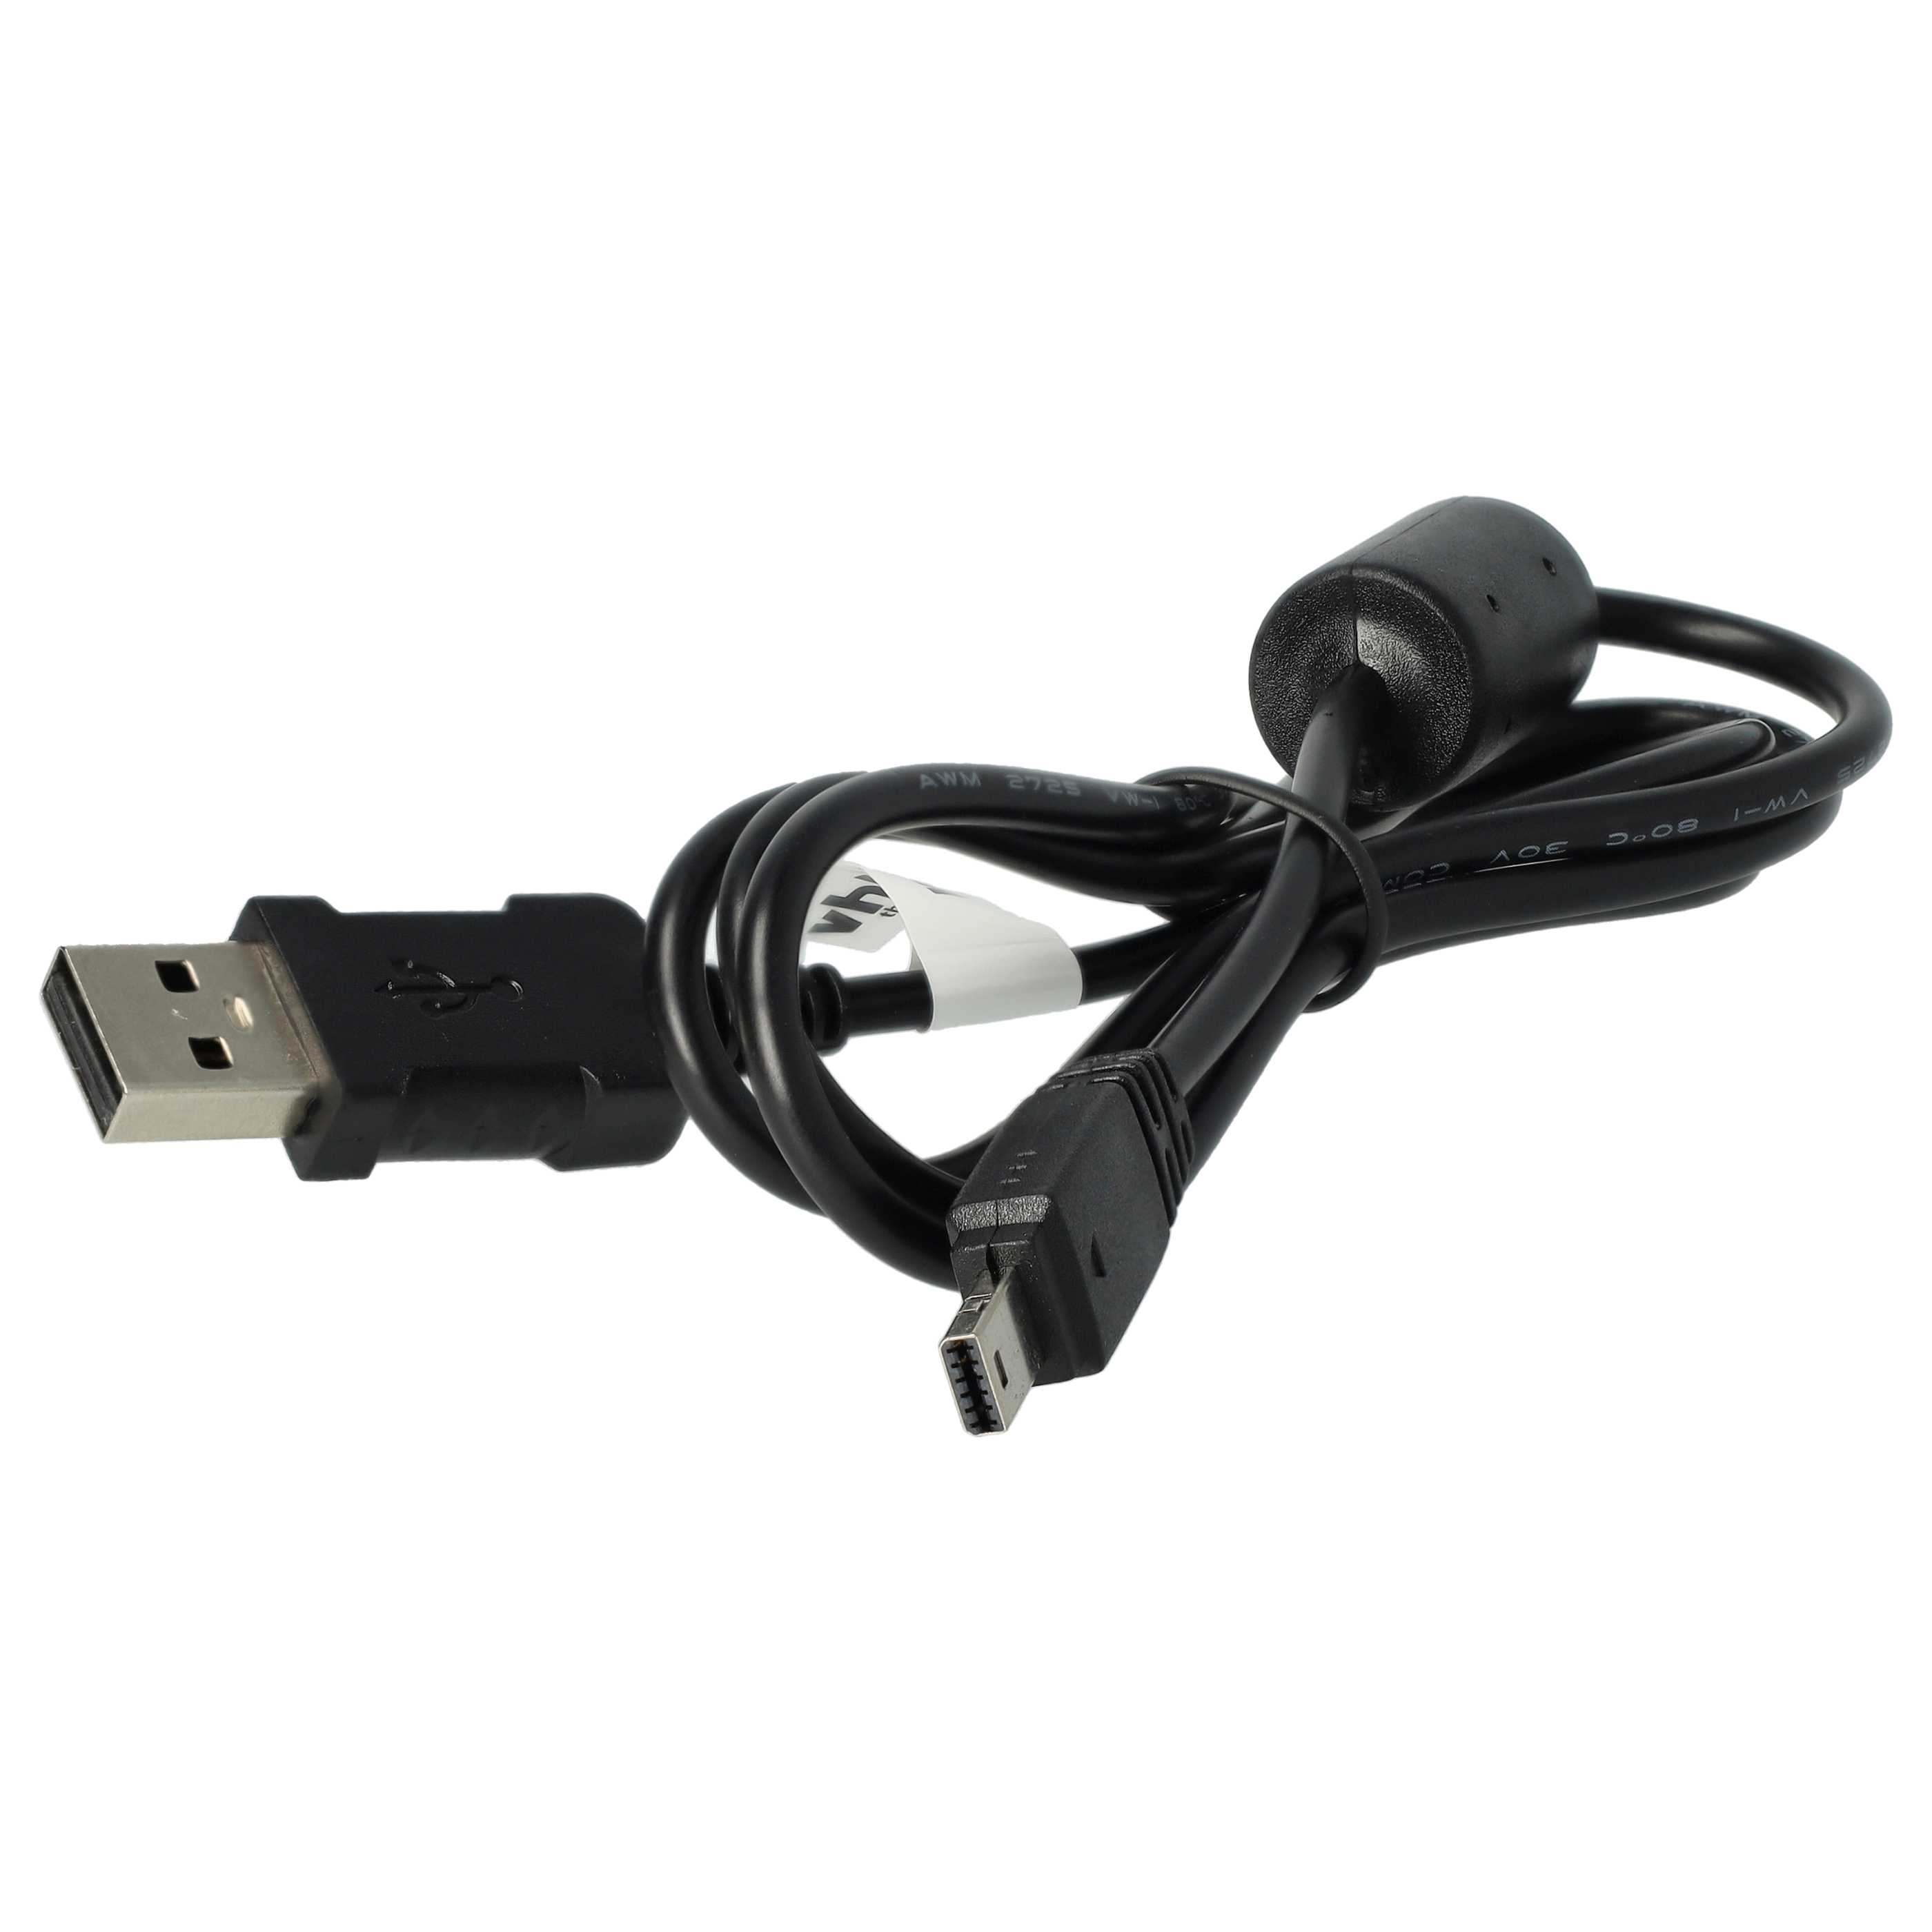 USB Data Cable replaces Casio U-8, EMC-6U, EMC-6 for Casio Camera - 100 cm